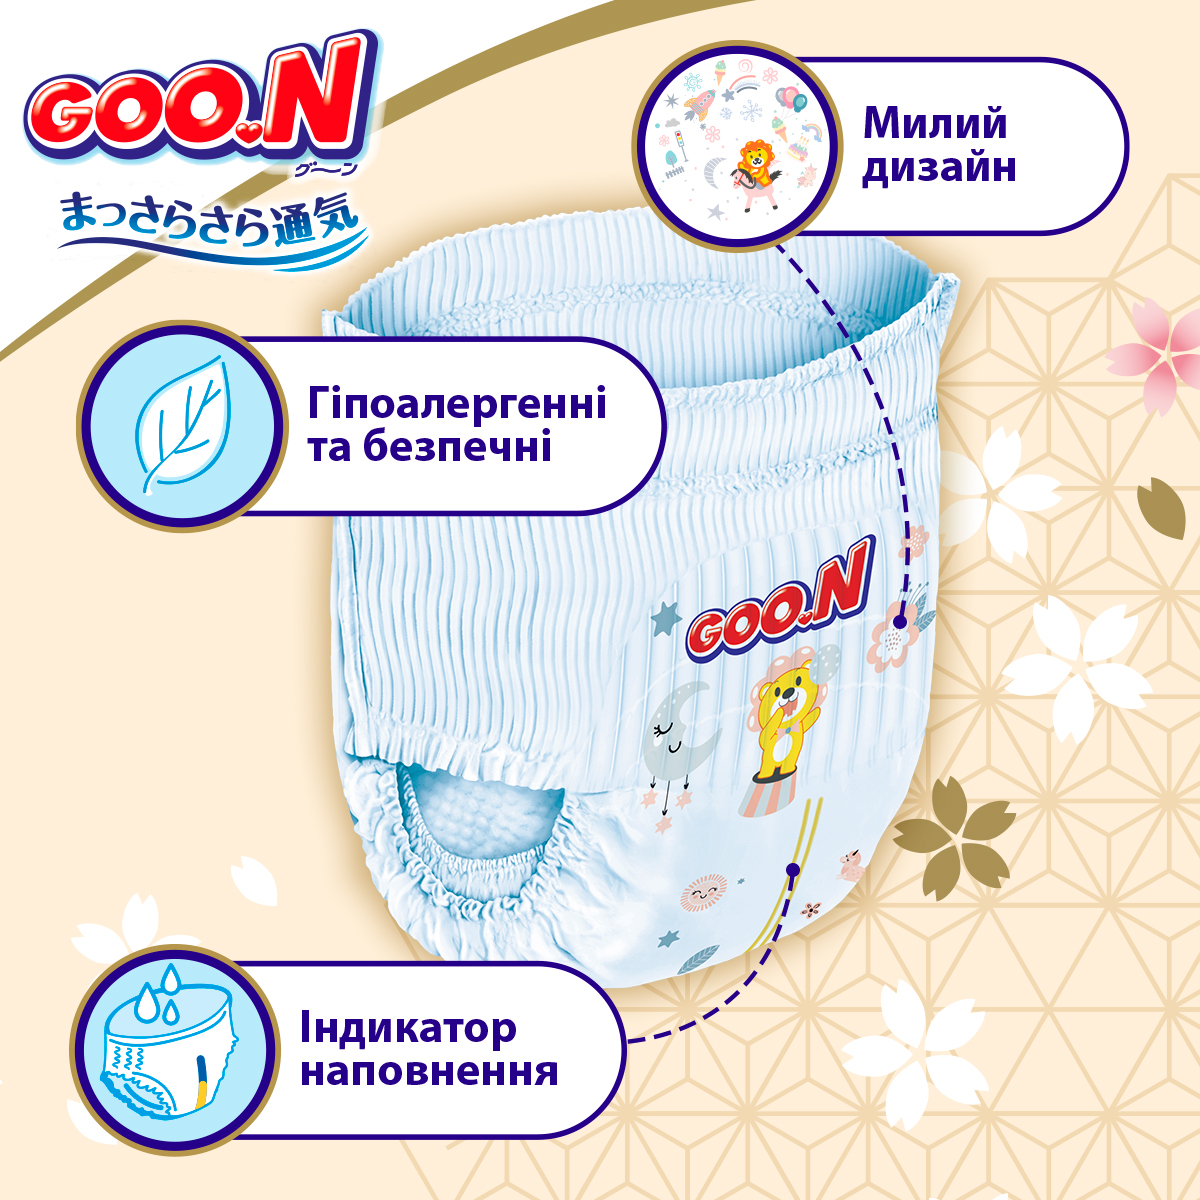 Трусики-подгузники Goo.N Premium Soft размер 5(XL) 12-17 кг доу-пак 72 шт. - фото 4